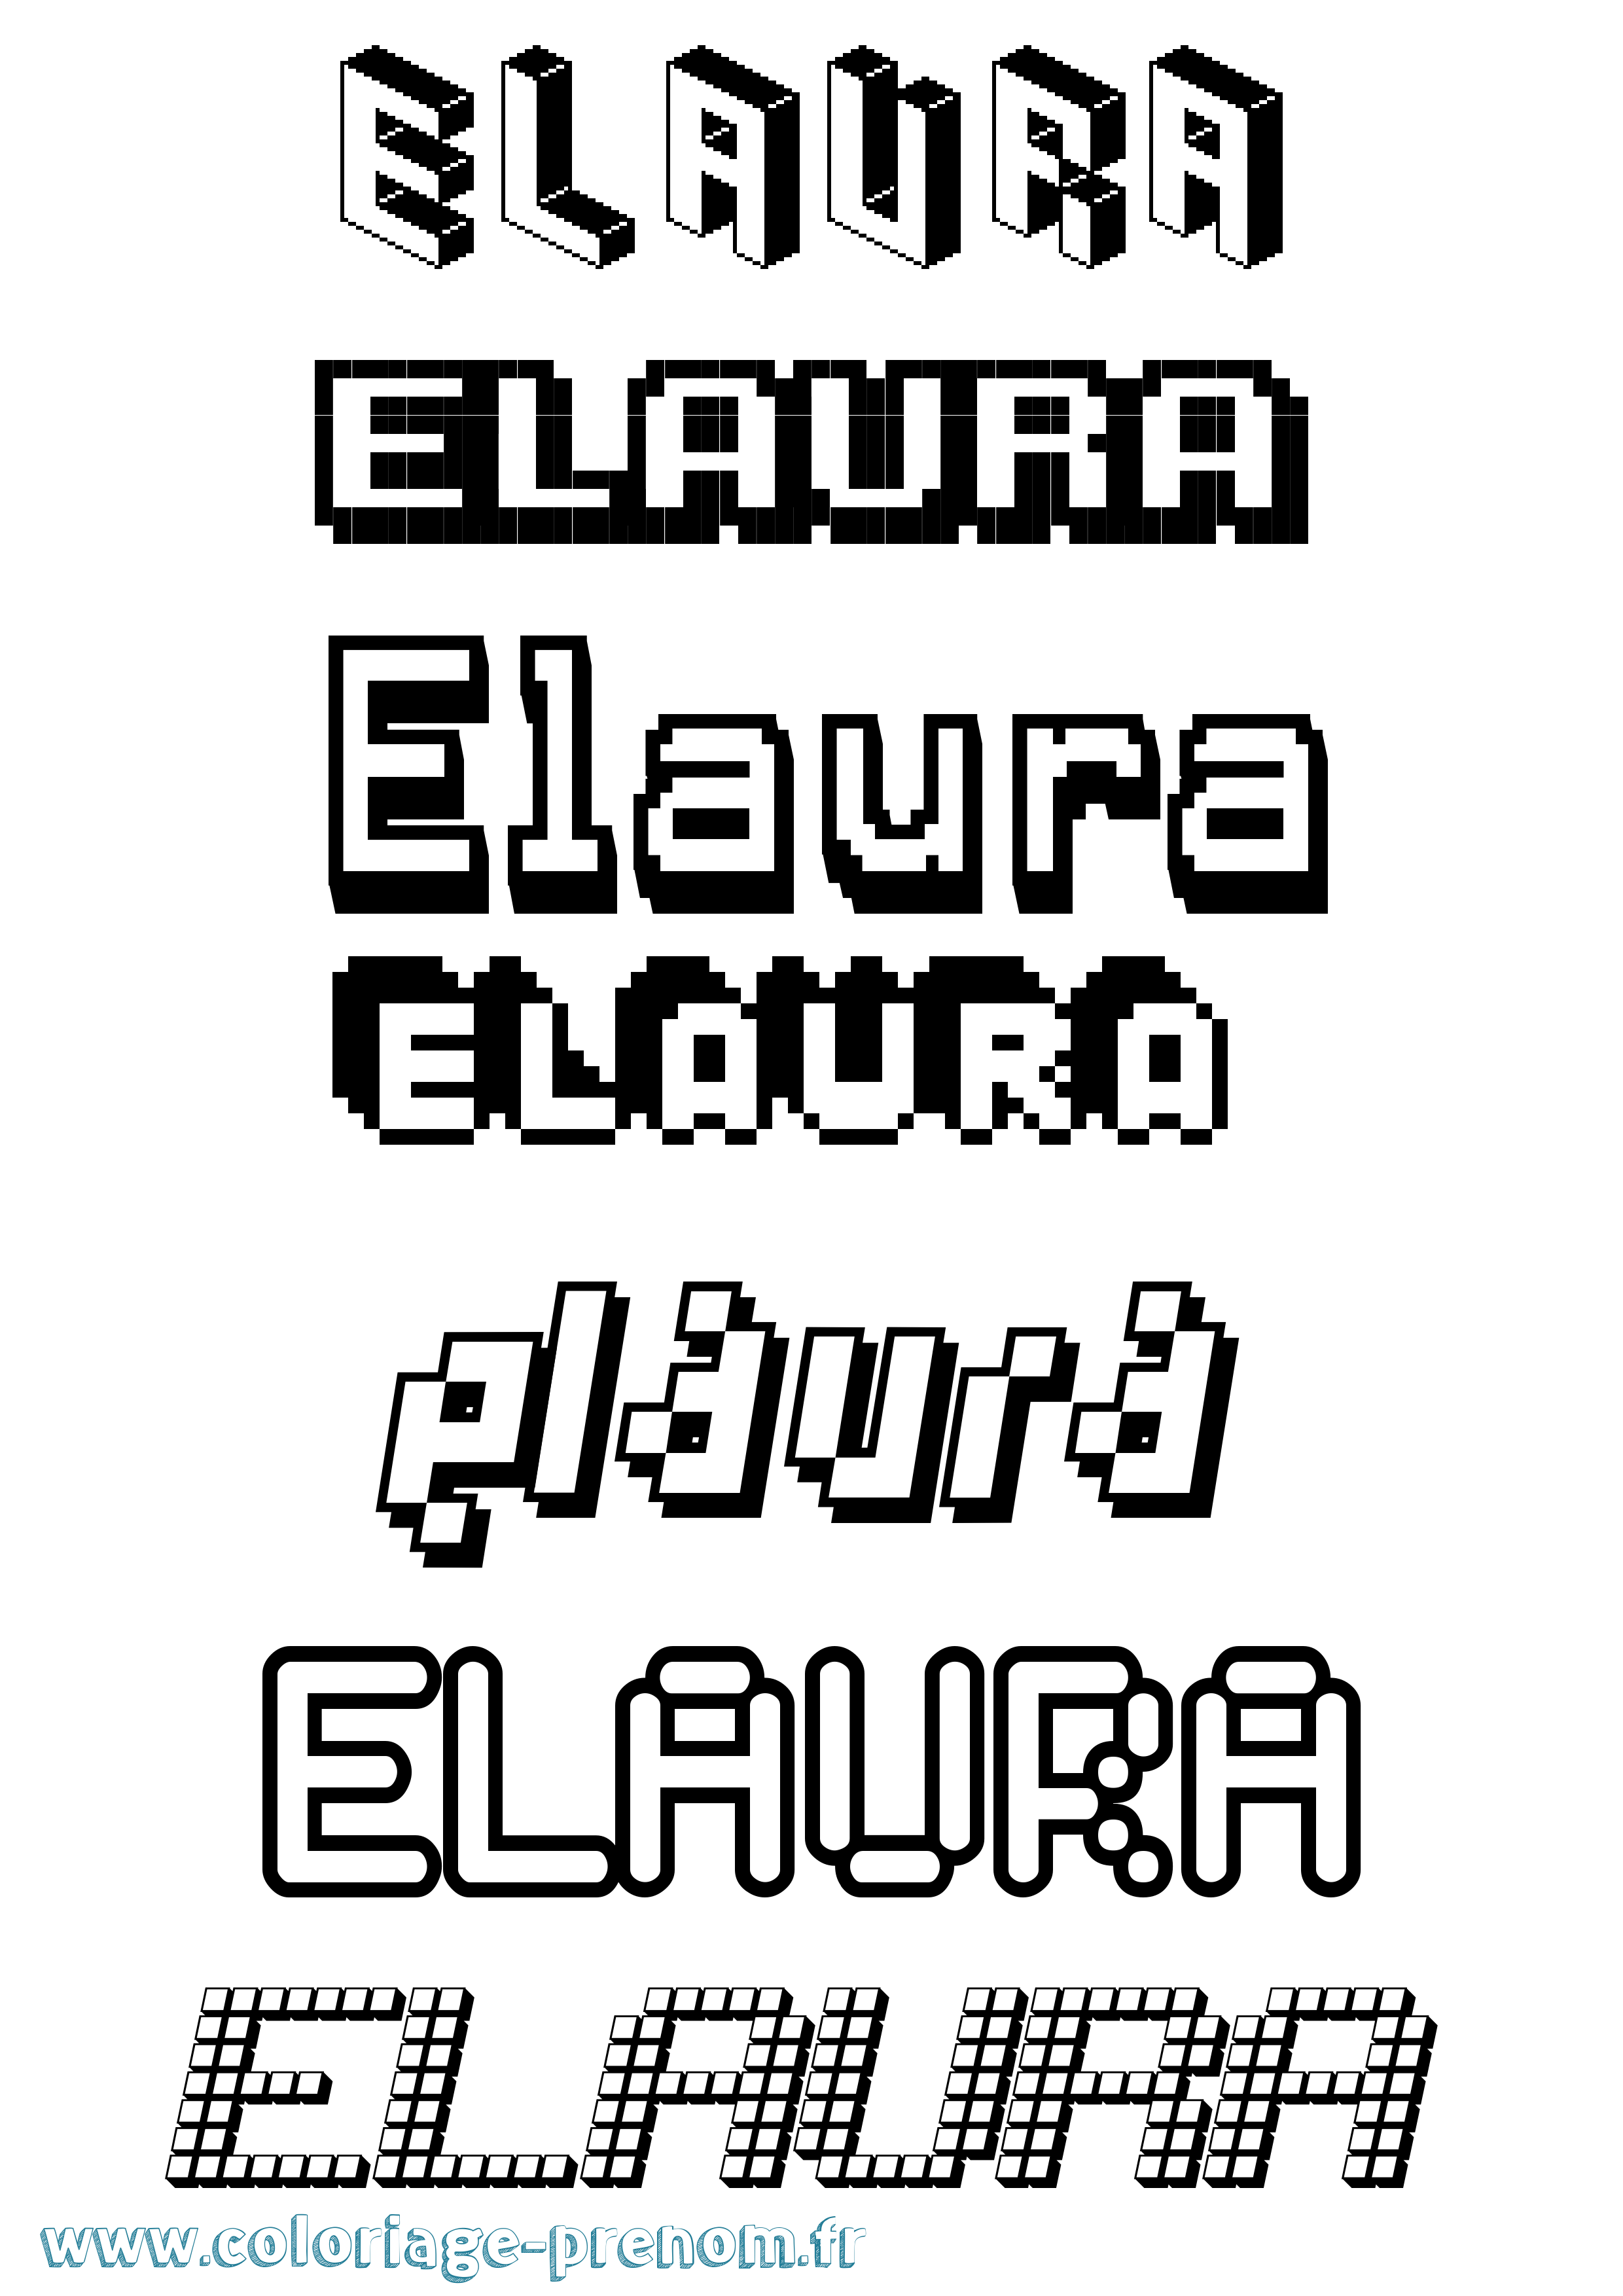 Coloriage prénom Elaura Pixel